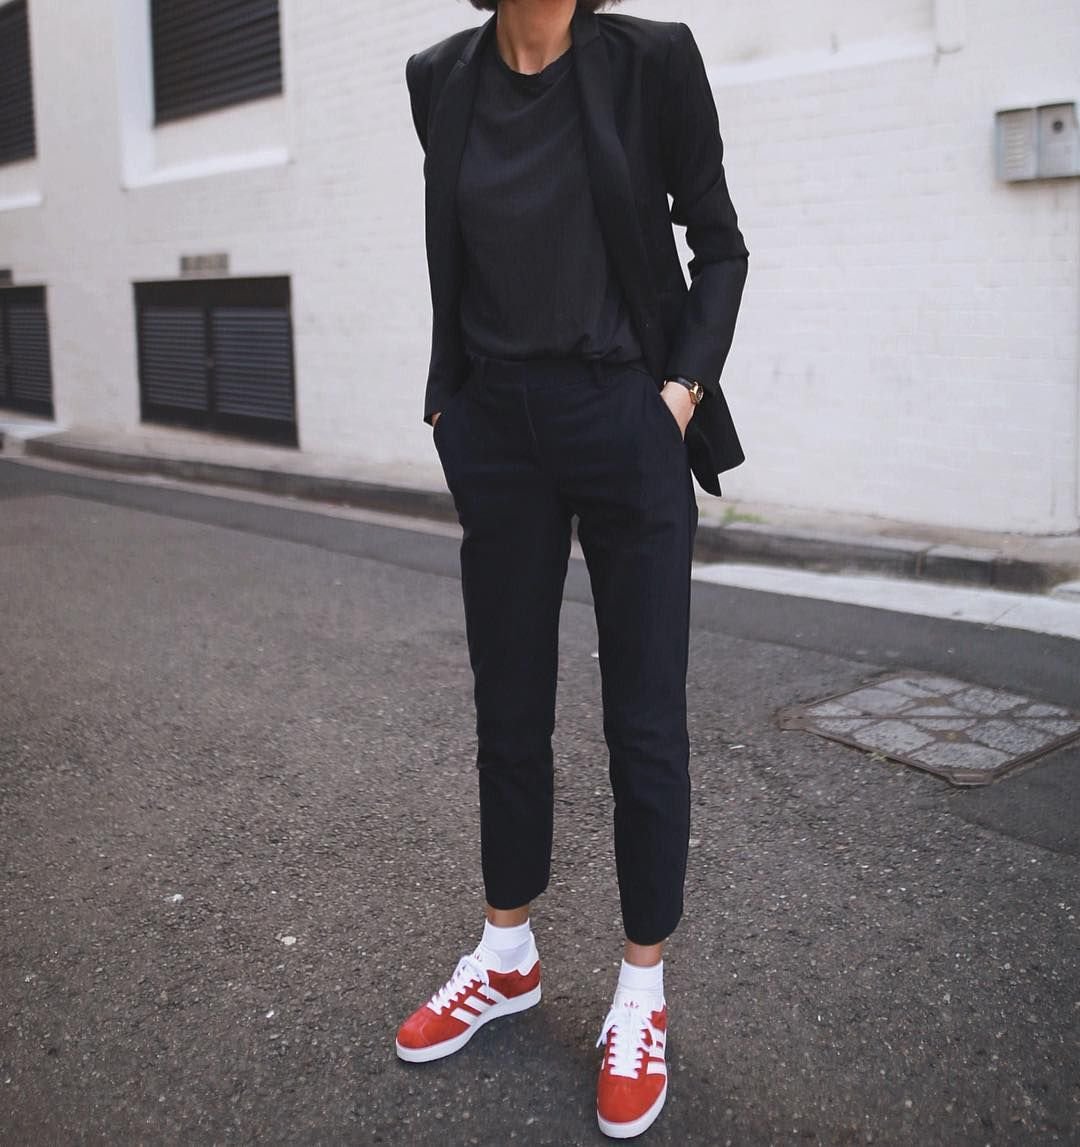 Черные штаны с кроссовками. Adidas Gazelle Red outfit. Adidas Gazelle outfit. Adidas Gazelle образы. Adidas Gazelle looks.